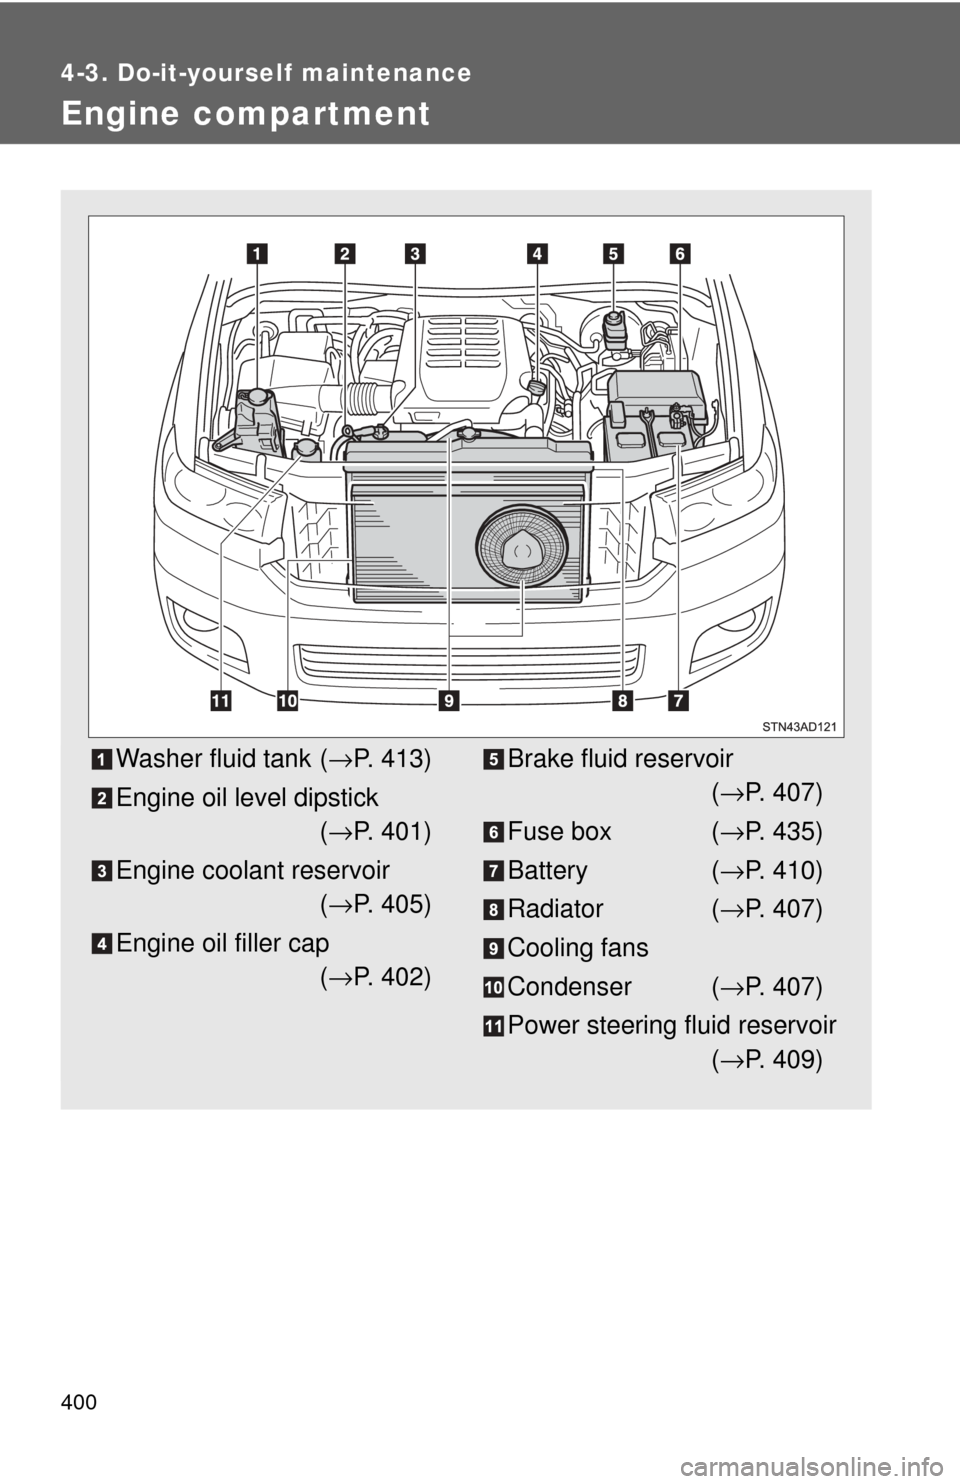 TOYOTA SEQUOIA 2017 2.G Owners Manual 400
4-3. Do-it-yourself maintenance
Engine compartment
Washer fluid tank (→P. 413)
Engine oil level dipstick (→ P. 401)
Engine coolant reservoir (→ P. 405)
Engine oil filler cap (→ P. 402)Brak